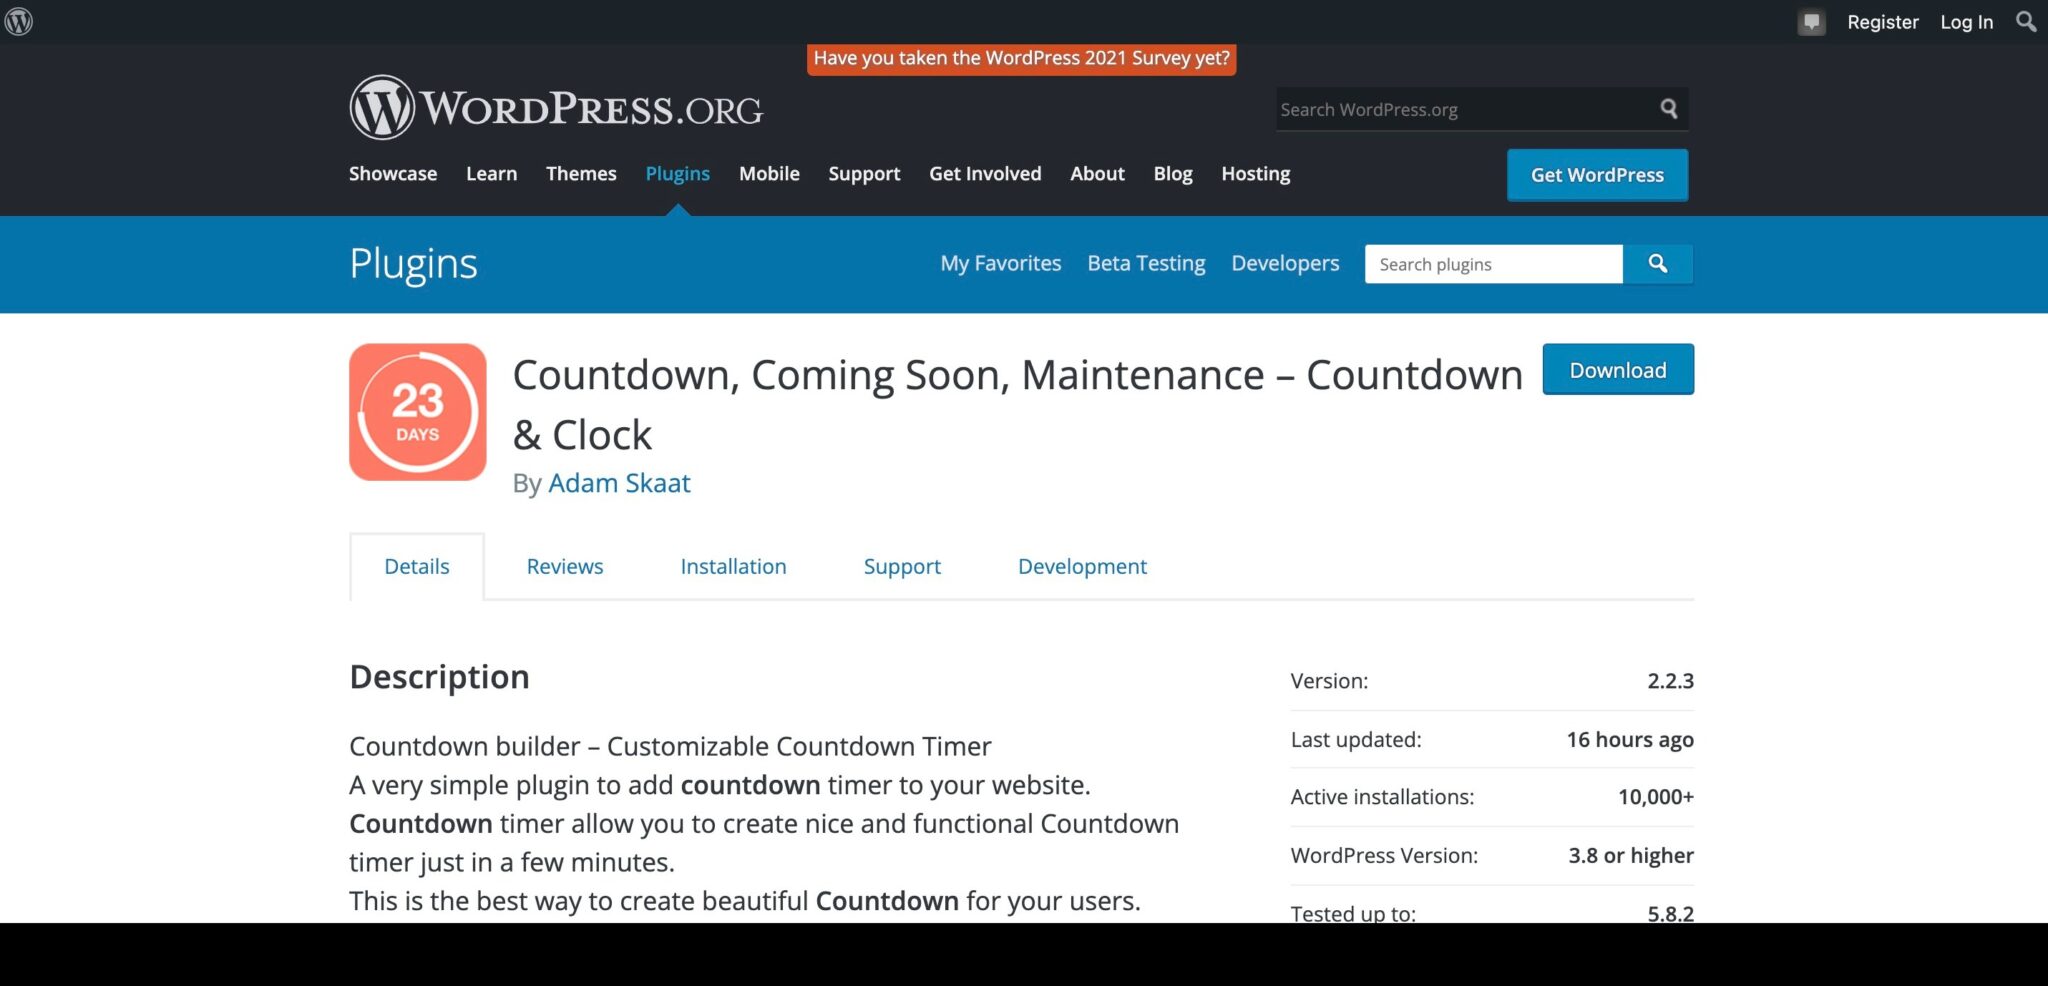 https://www.nichepursuits.com/wp-content/uploads/2021/12/Screenshot-of-Countdown-Coming-Soon-Maintenance-%E2%80%93-Countdown-Clock-%E2%80%93-WordPress-plugin-_-WordPress.org_-scaled.jpg